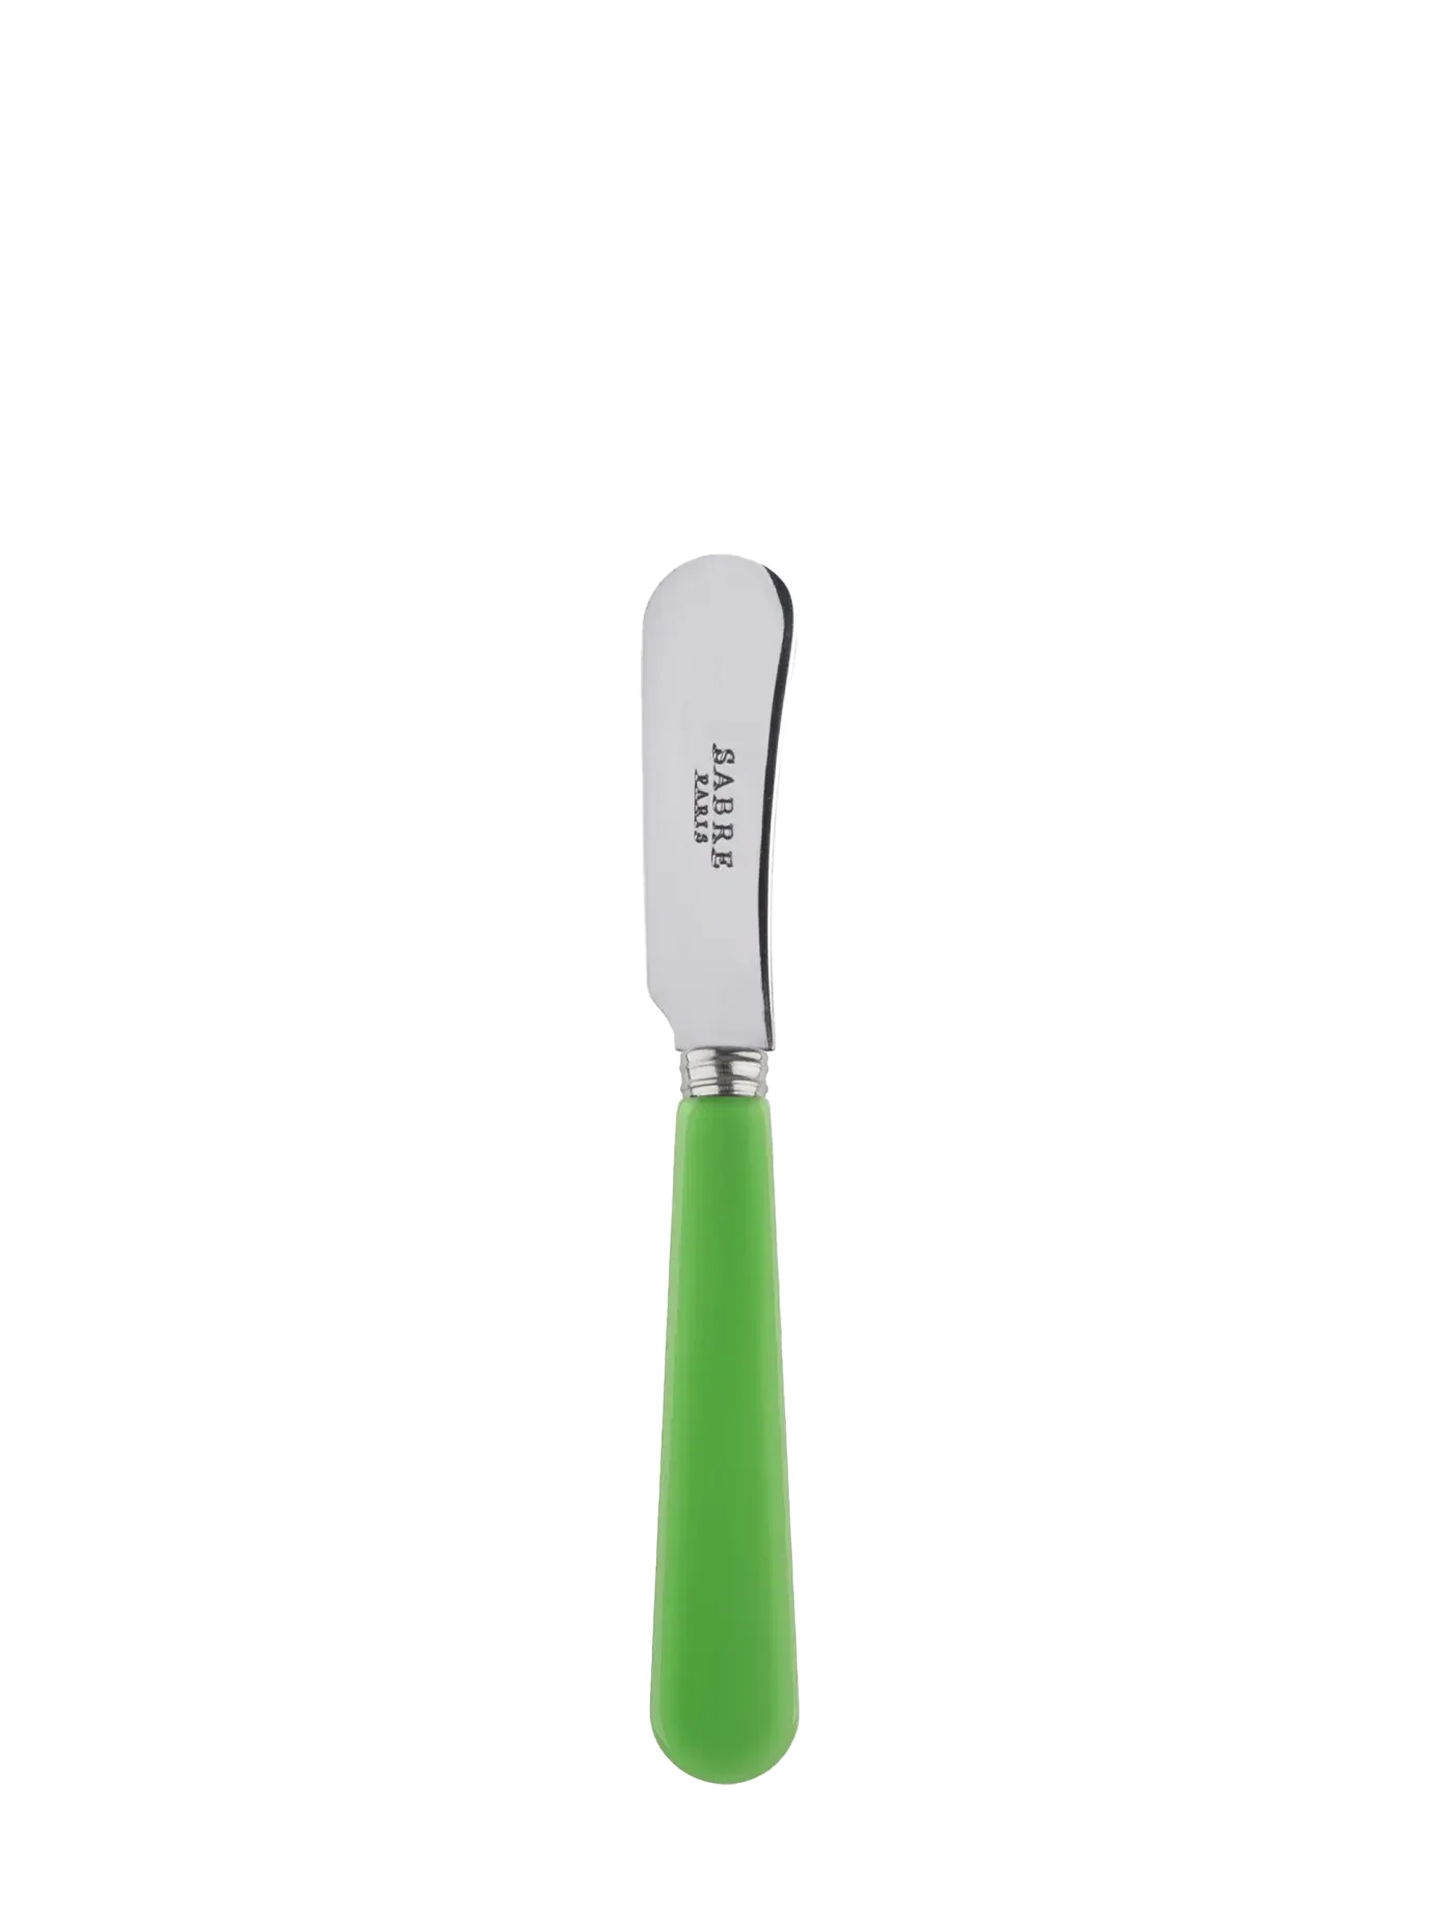 Duo butter knife, green